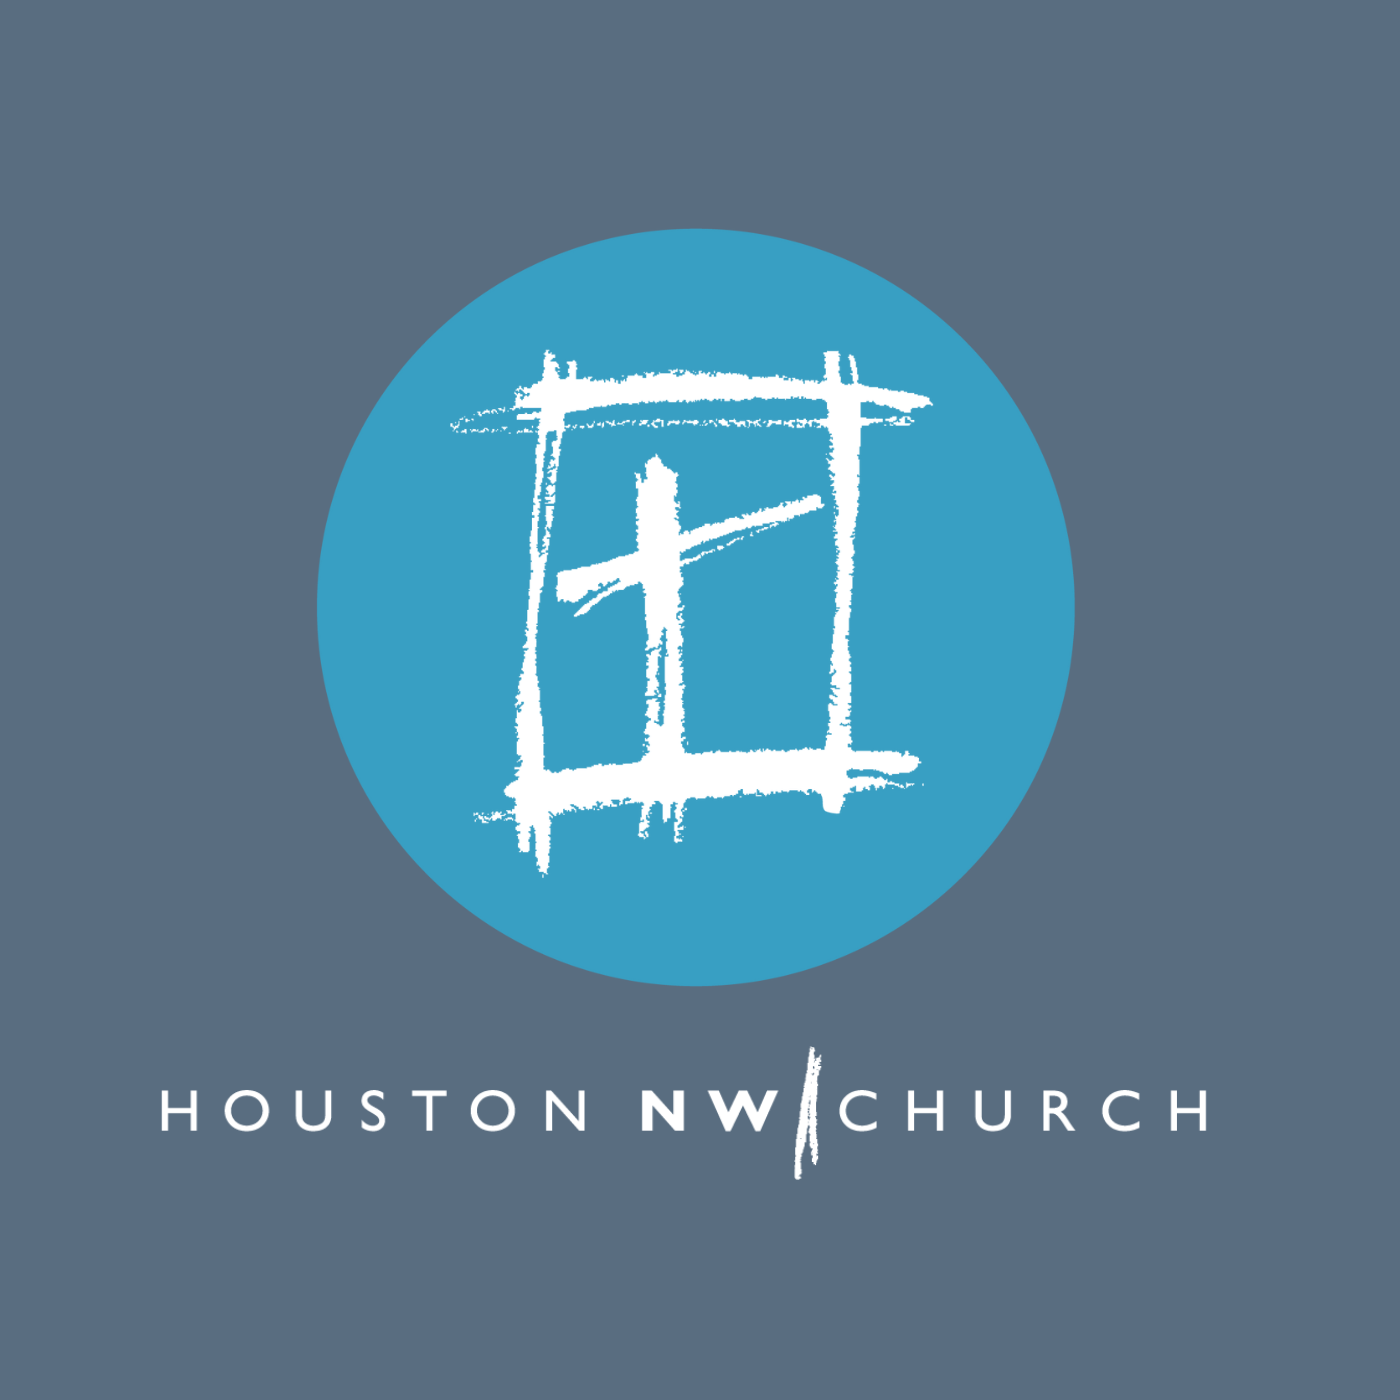 Houston Northwest Church